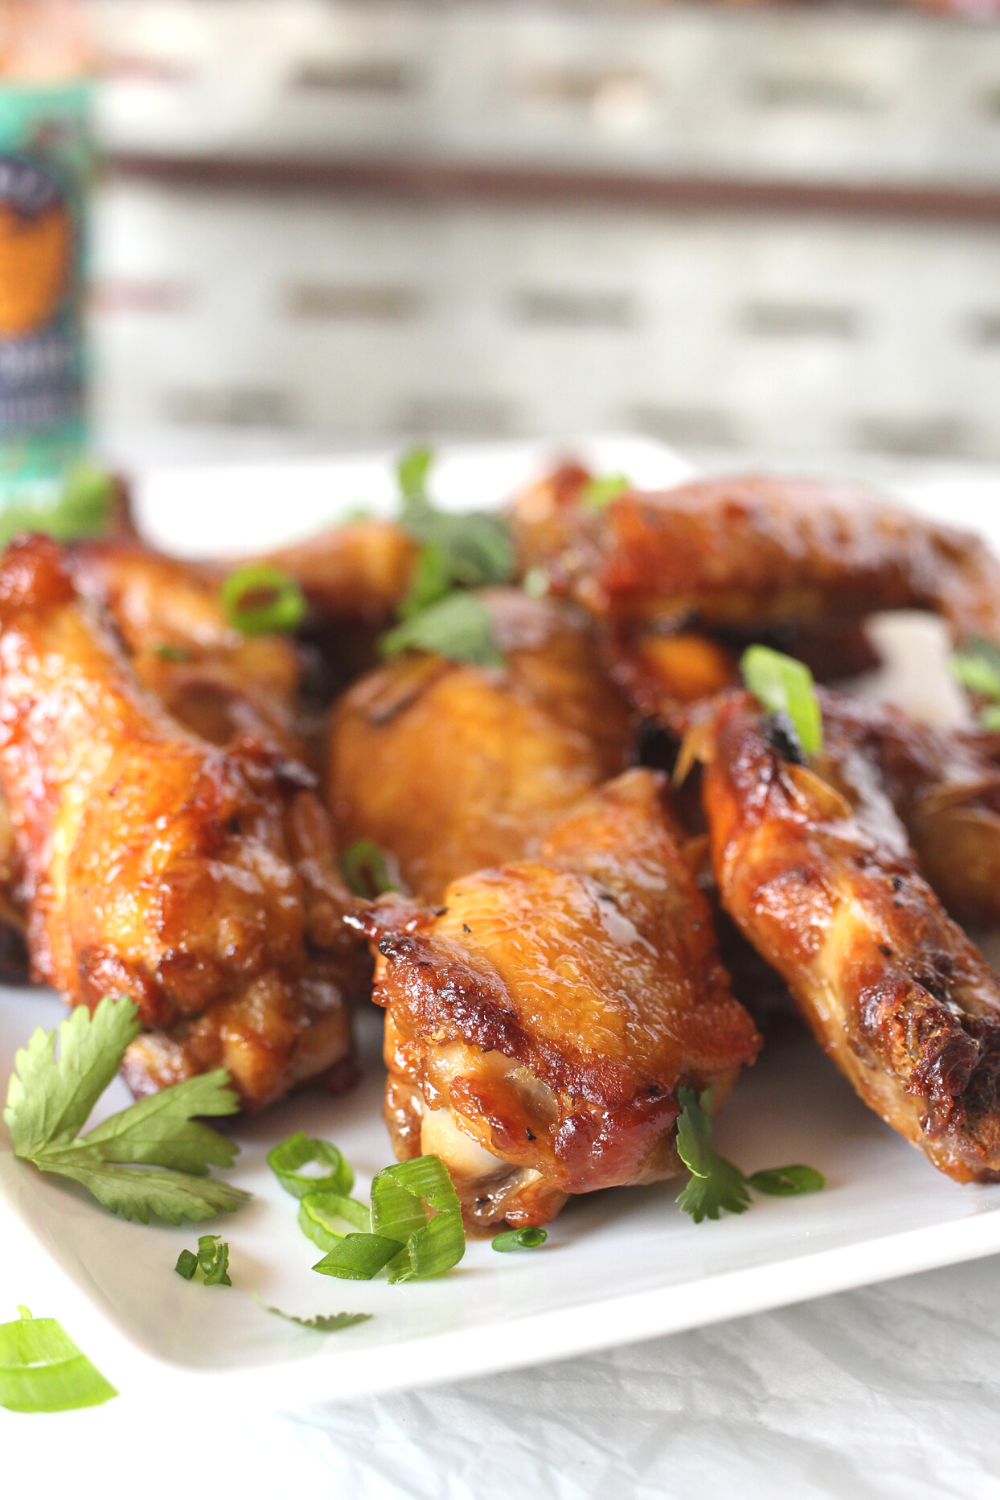 Adobo chicken recipe using wings